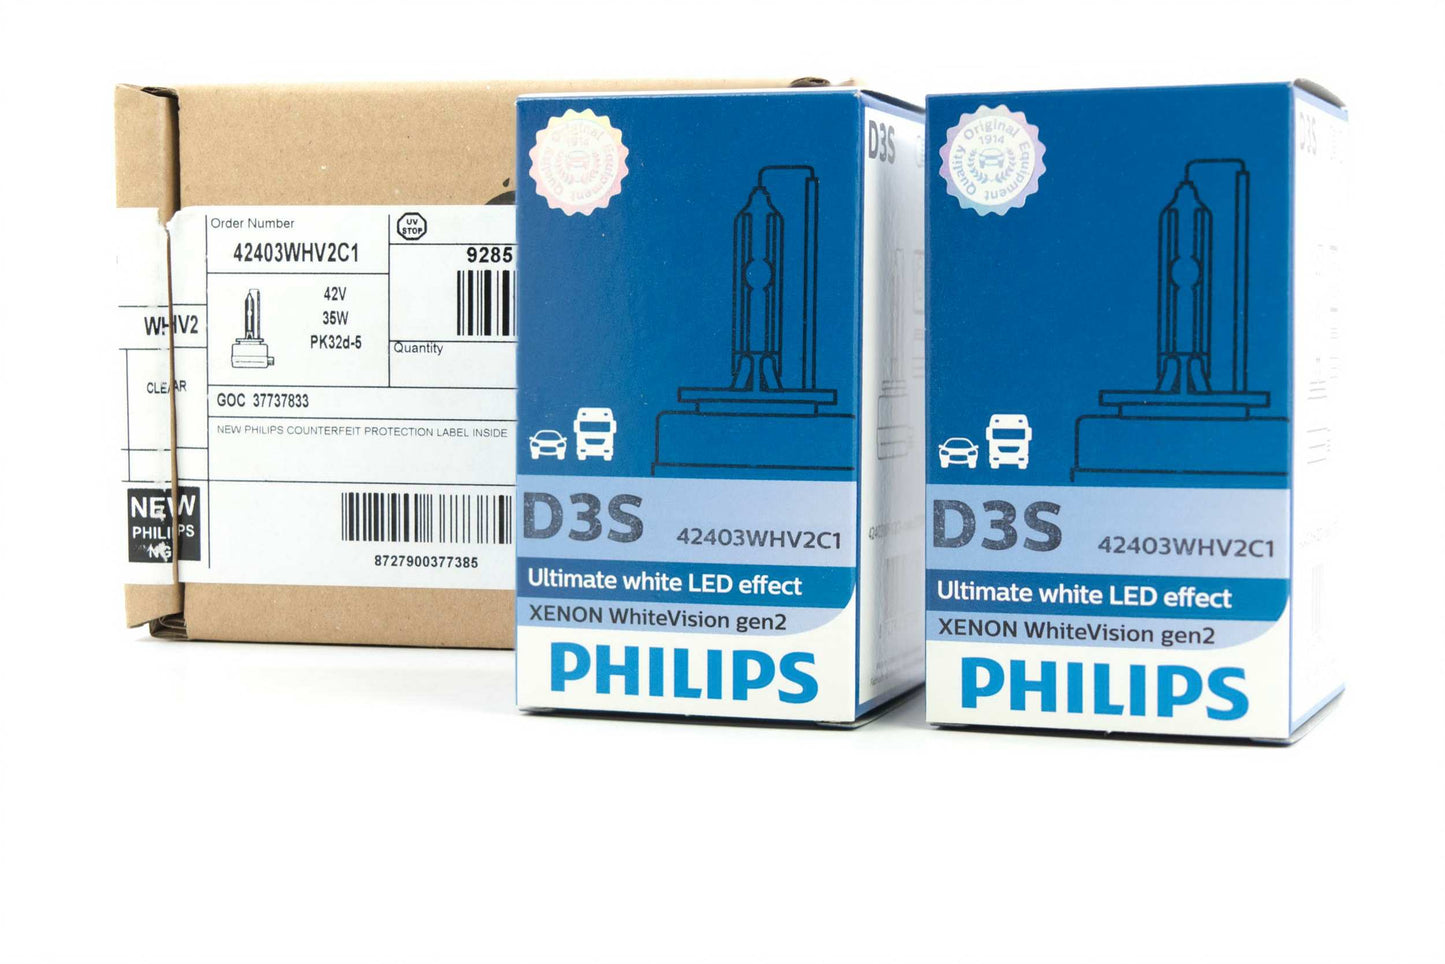 D3S: Philips 42403 WHV2 (5000K)